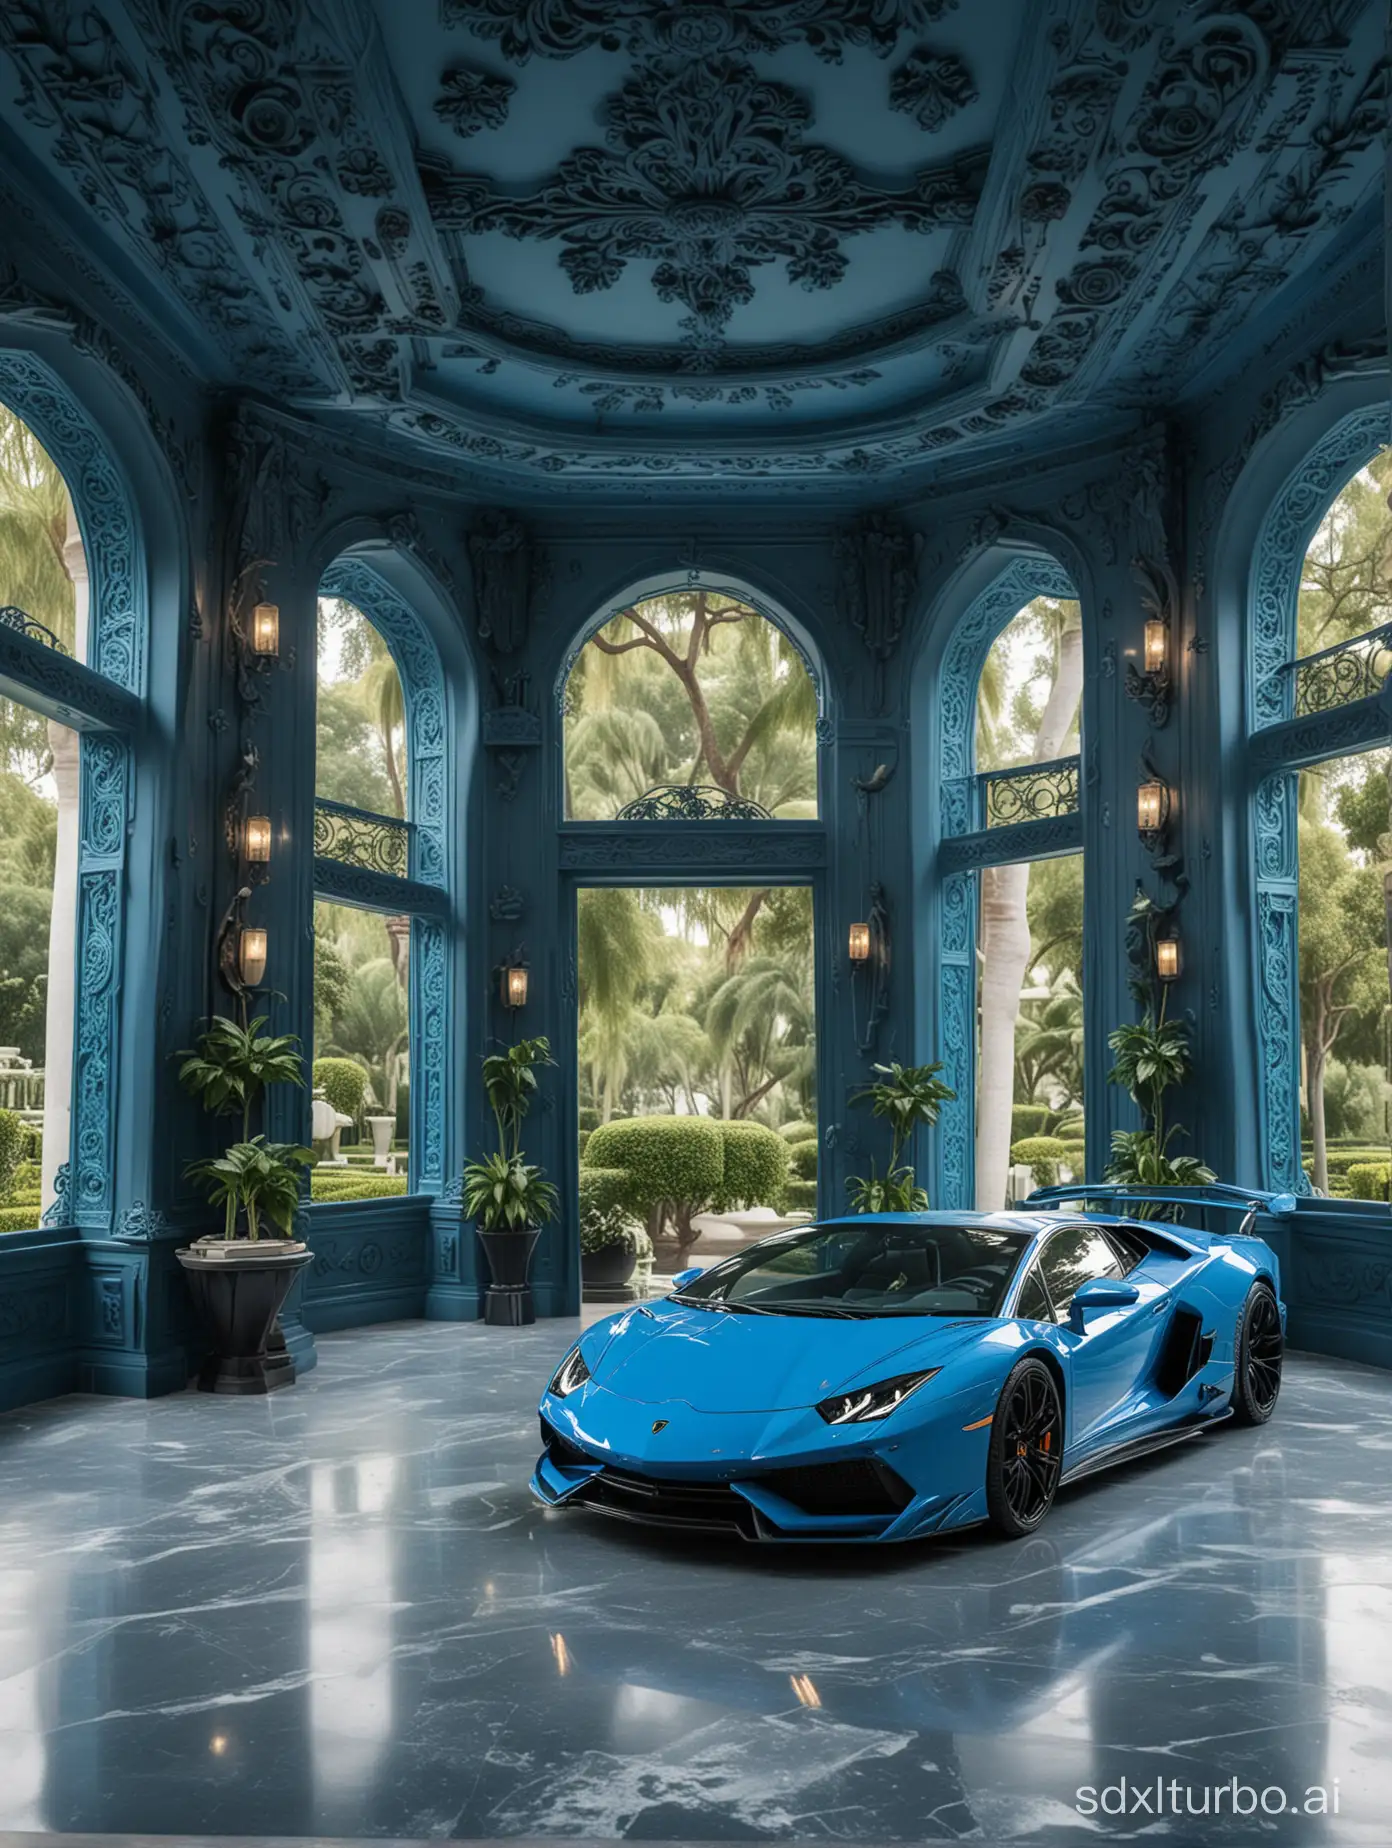 Luxurious-Blue-Lamborghini-in-Extravagant-Showroom-Amid-Lush-Gardens